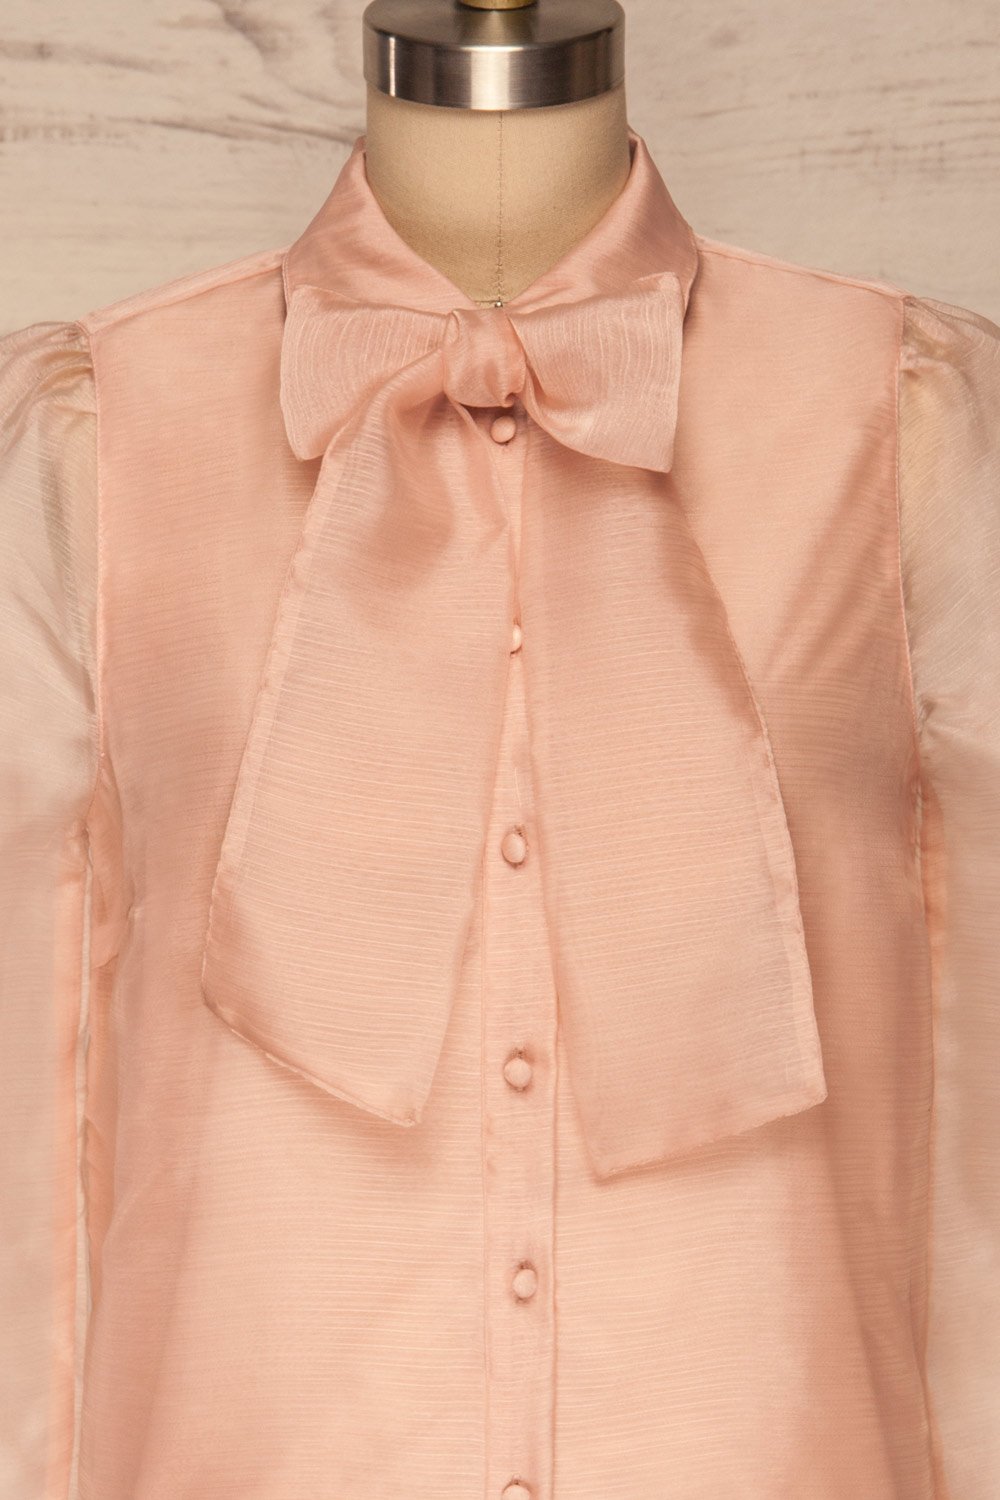 Xandra Rose Pink Tulle Shirt w/ Bow front close up bow | La petite garçonne